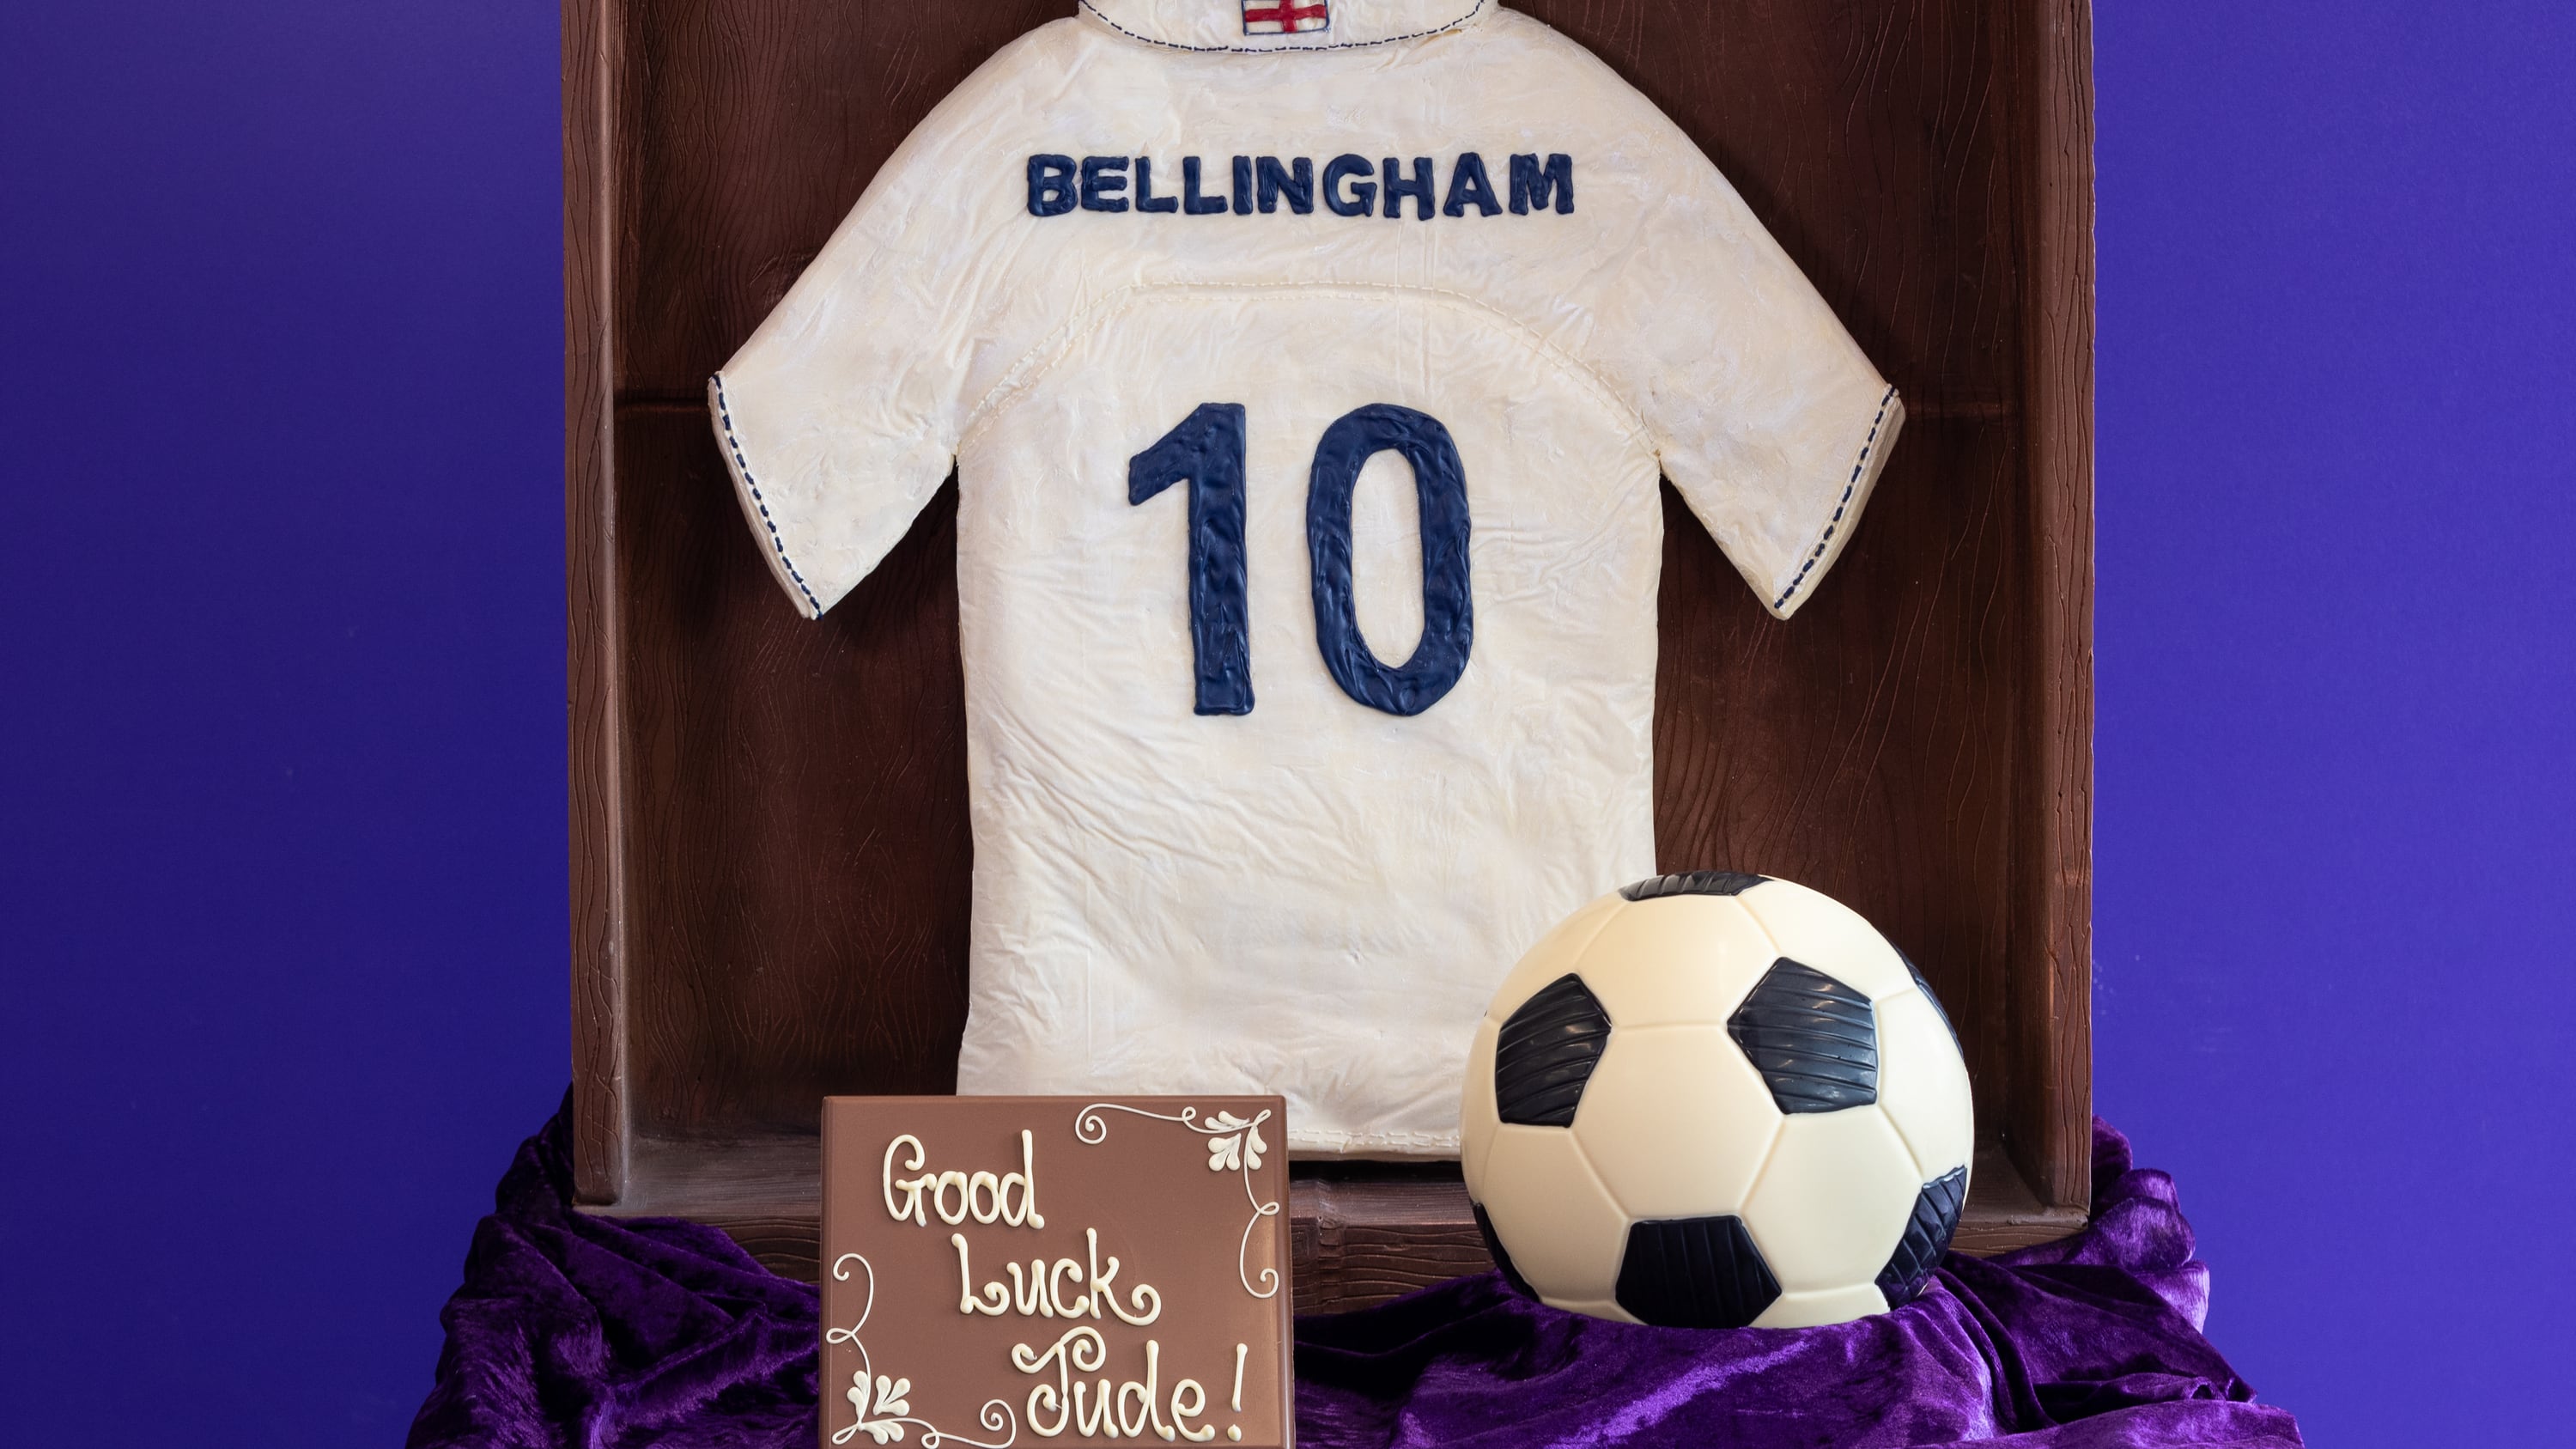 Cadbury World has created a chocolate replica of Jude Bellingham’s football shirt